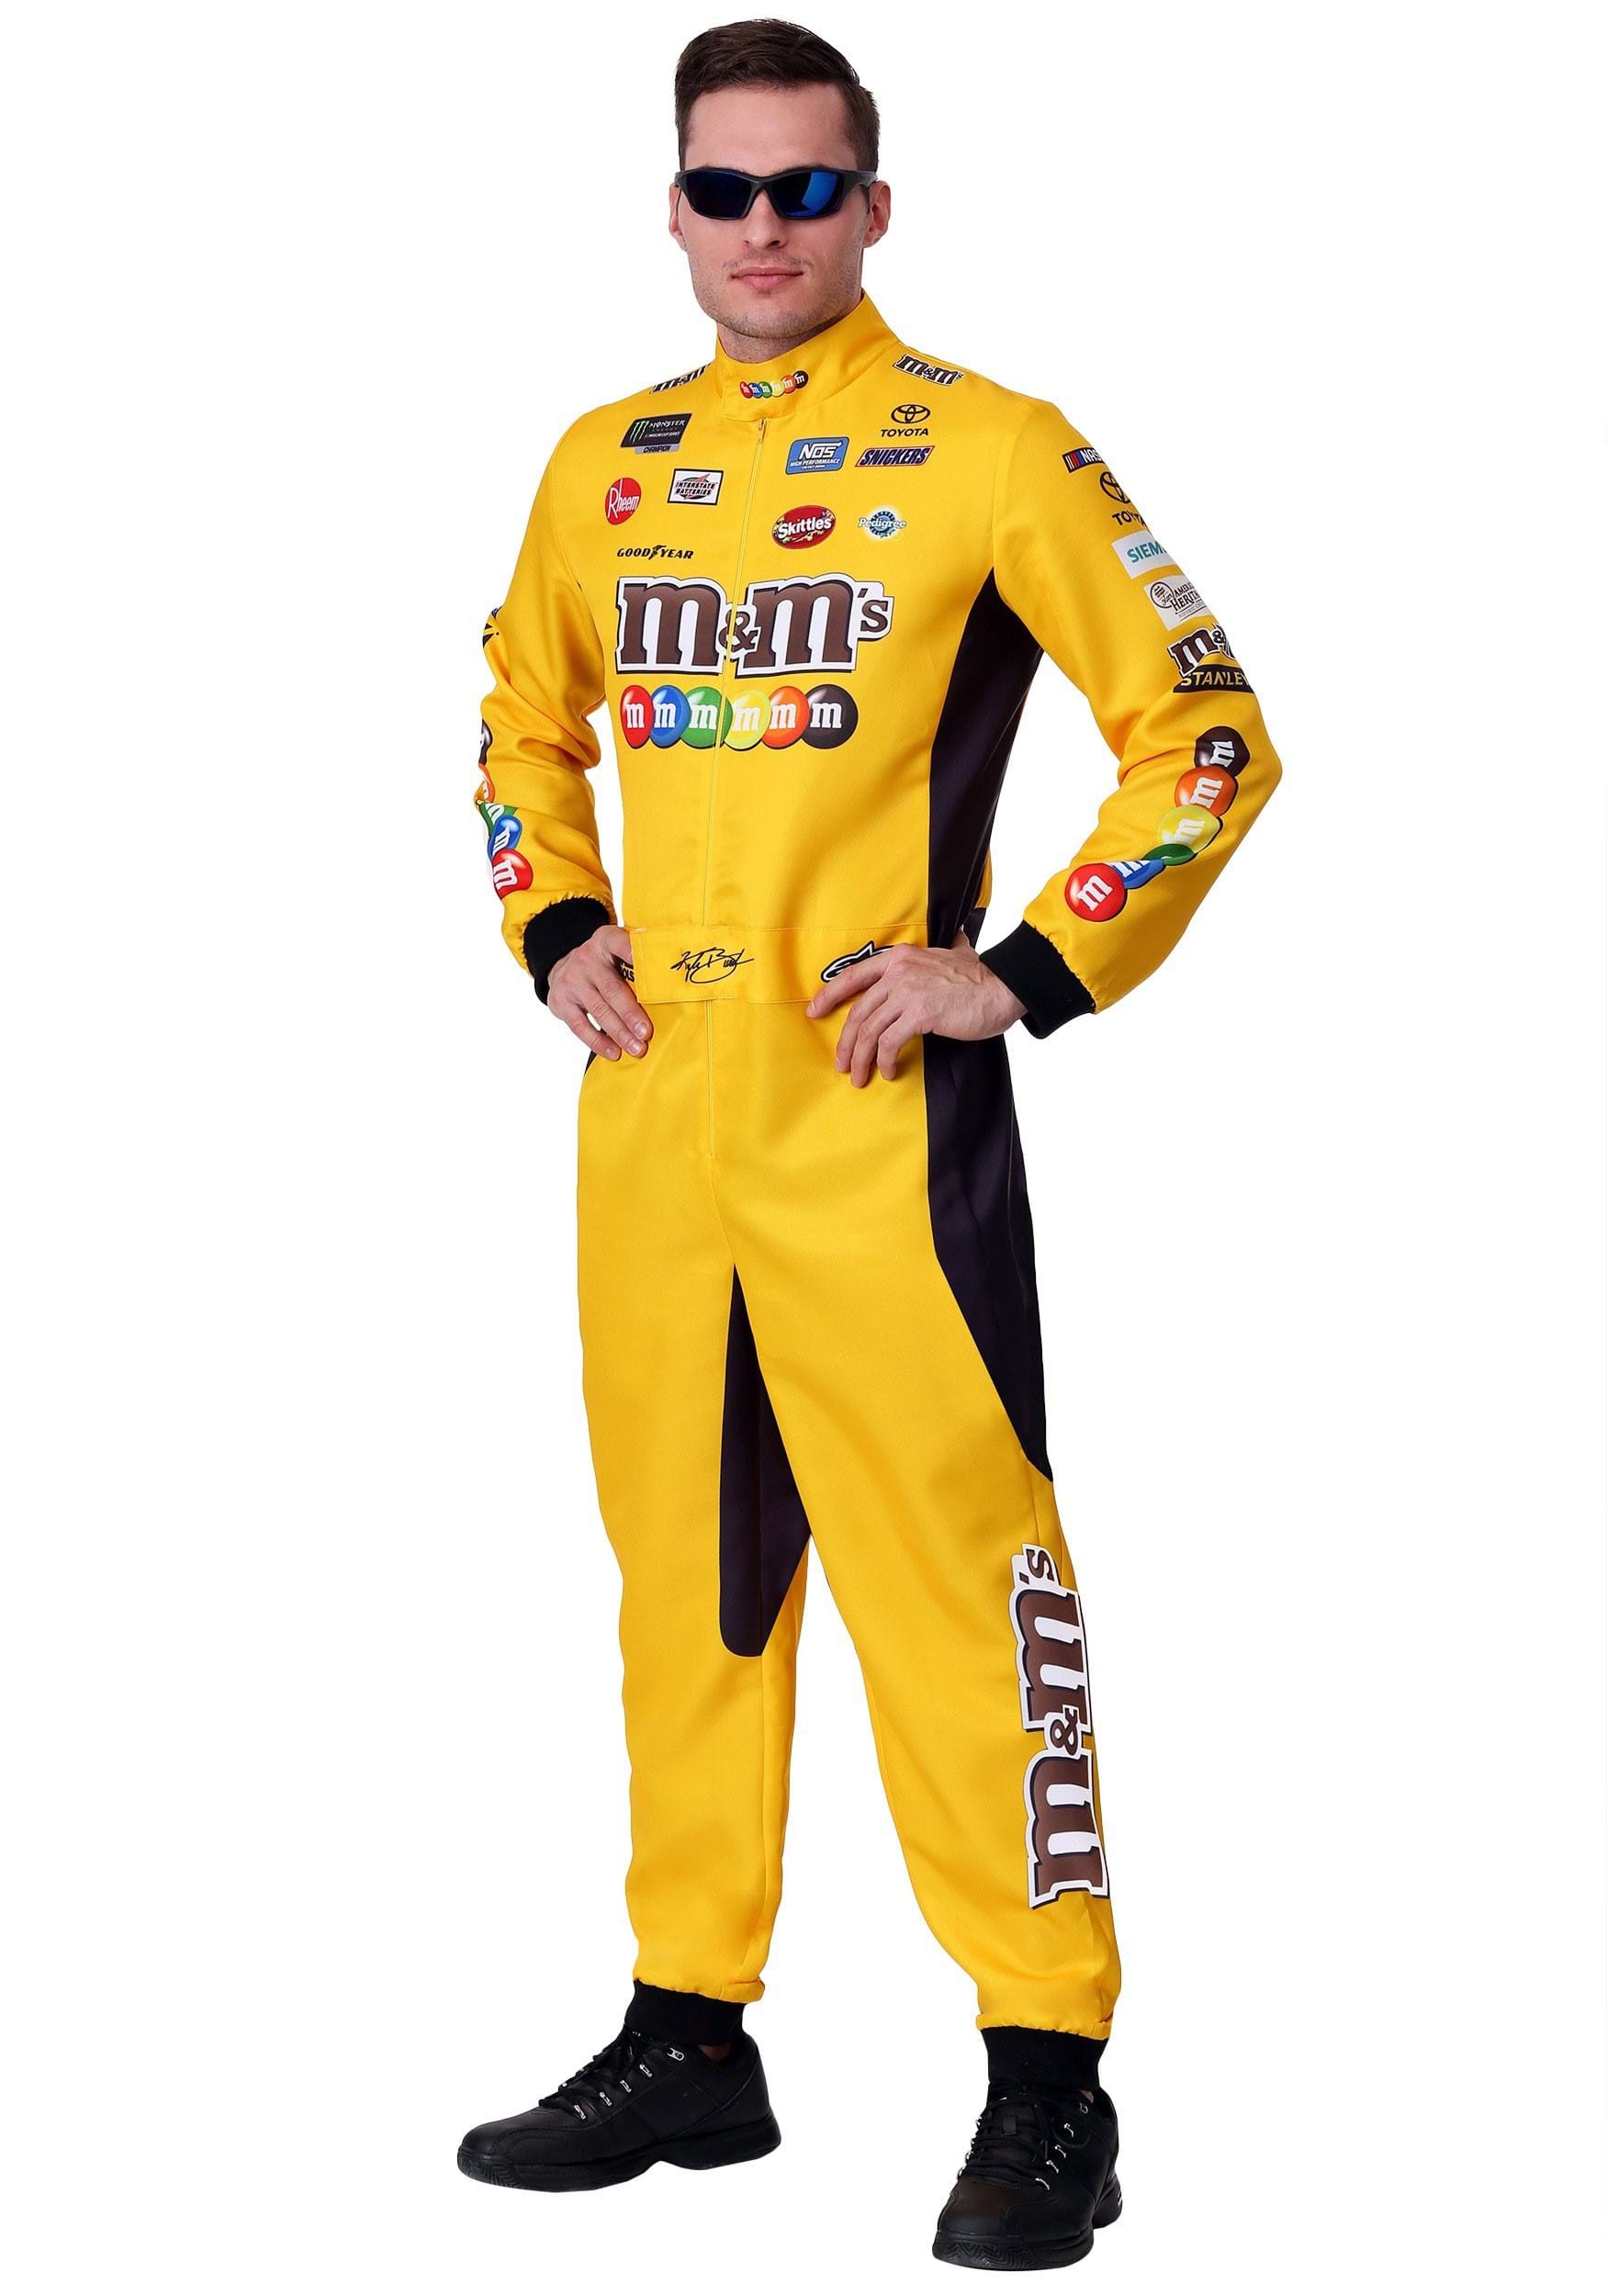 Kyle Busch Plus Size Uniform Costume from NASCAR